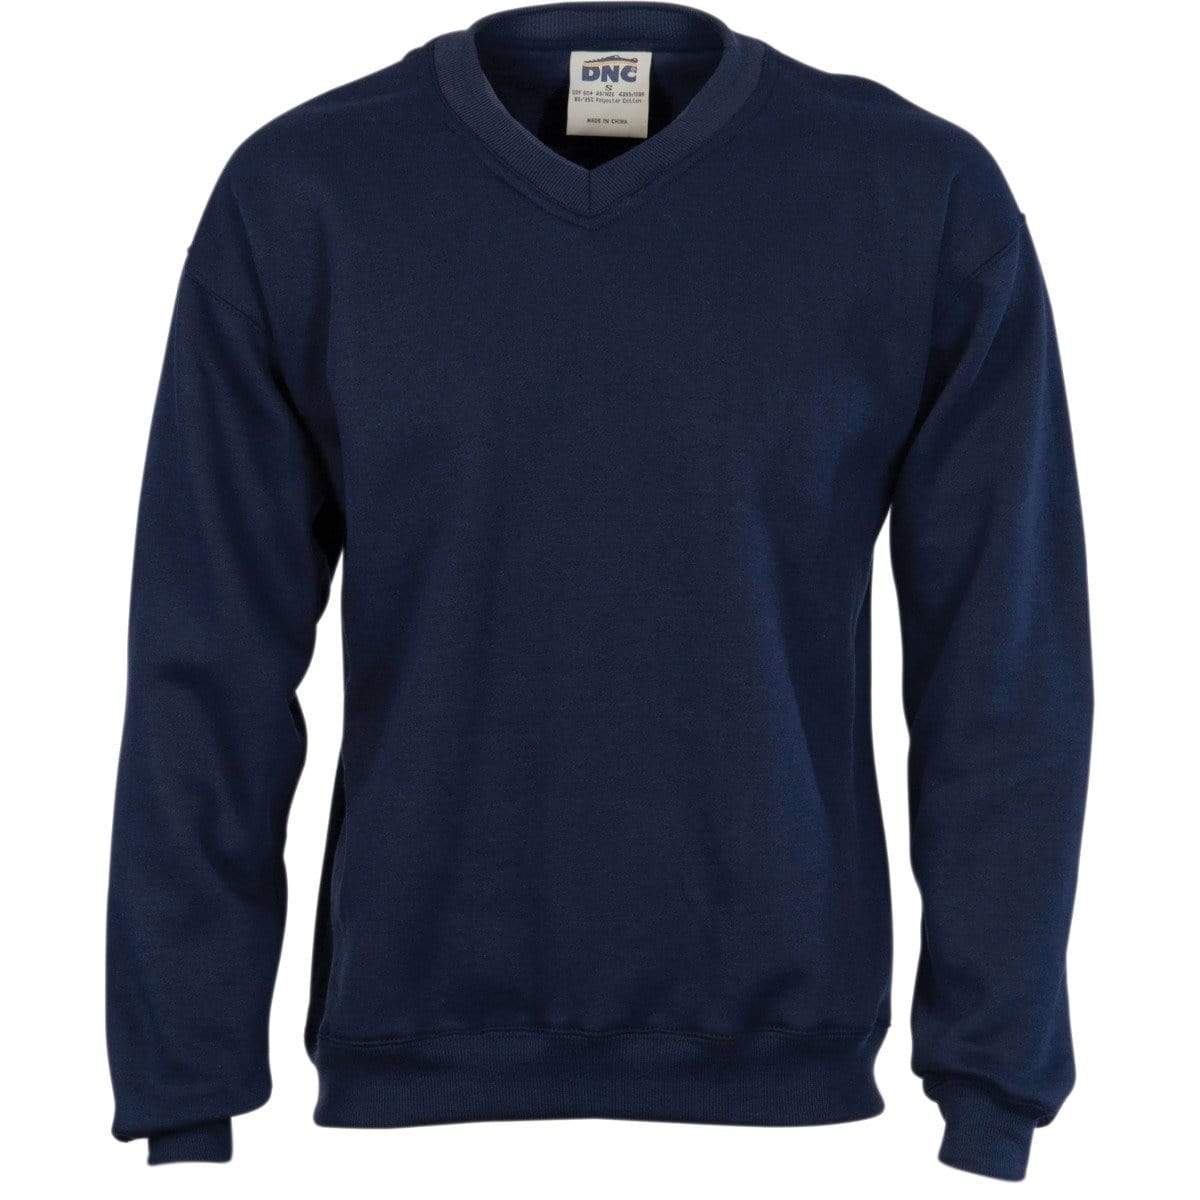 Dnc Workwear V-neck Fleecy Sweatshirt (Sloppy Joe) - 5301 Corporate Wear DNC Workwear Navy XS 